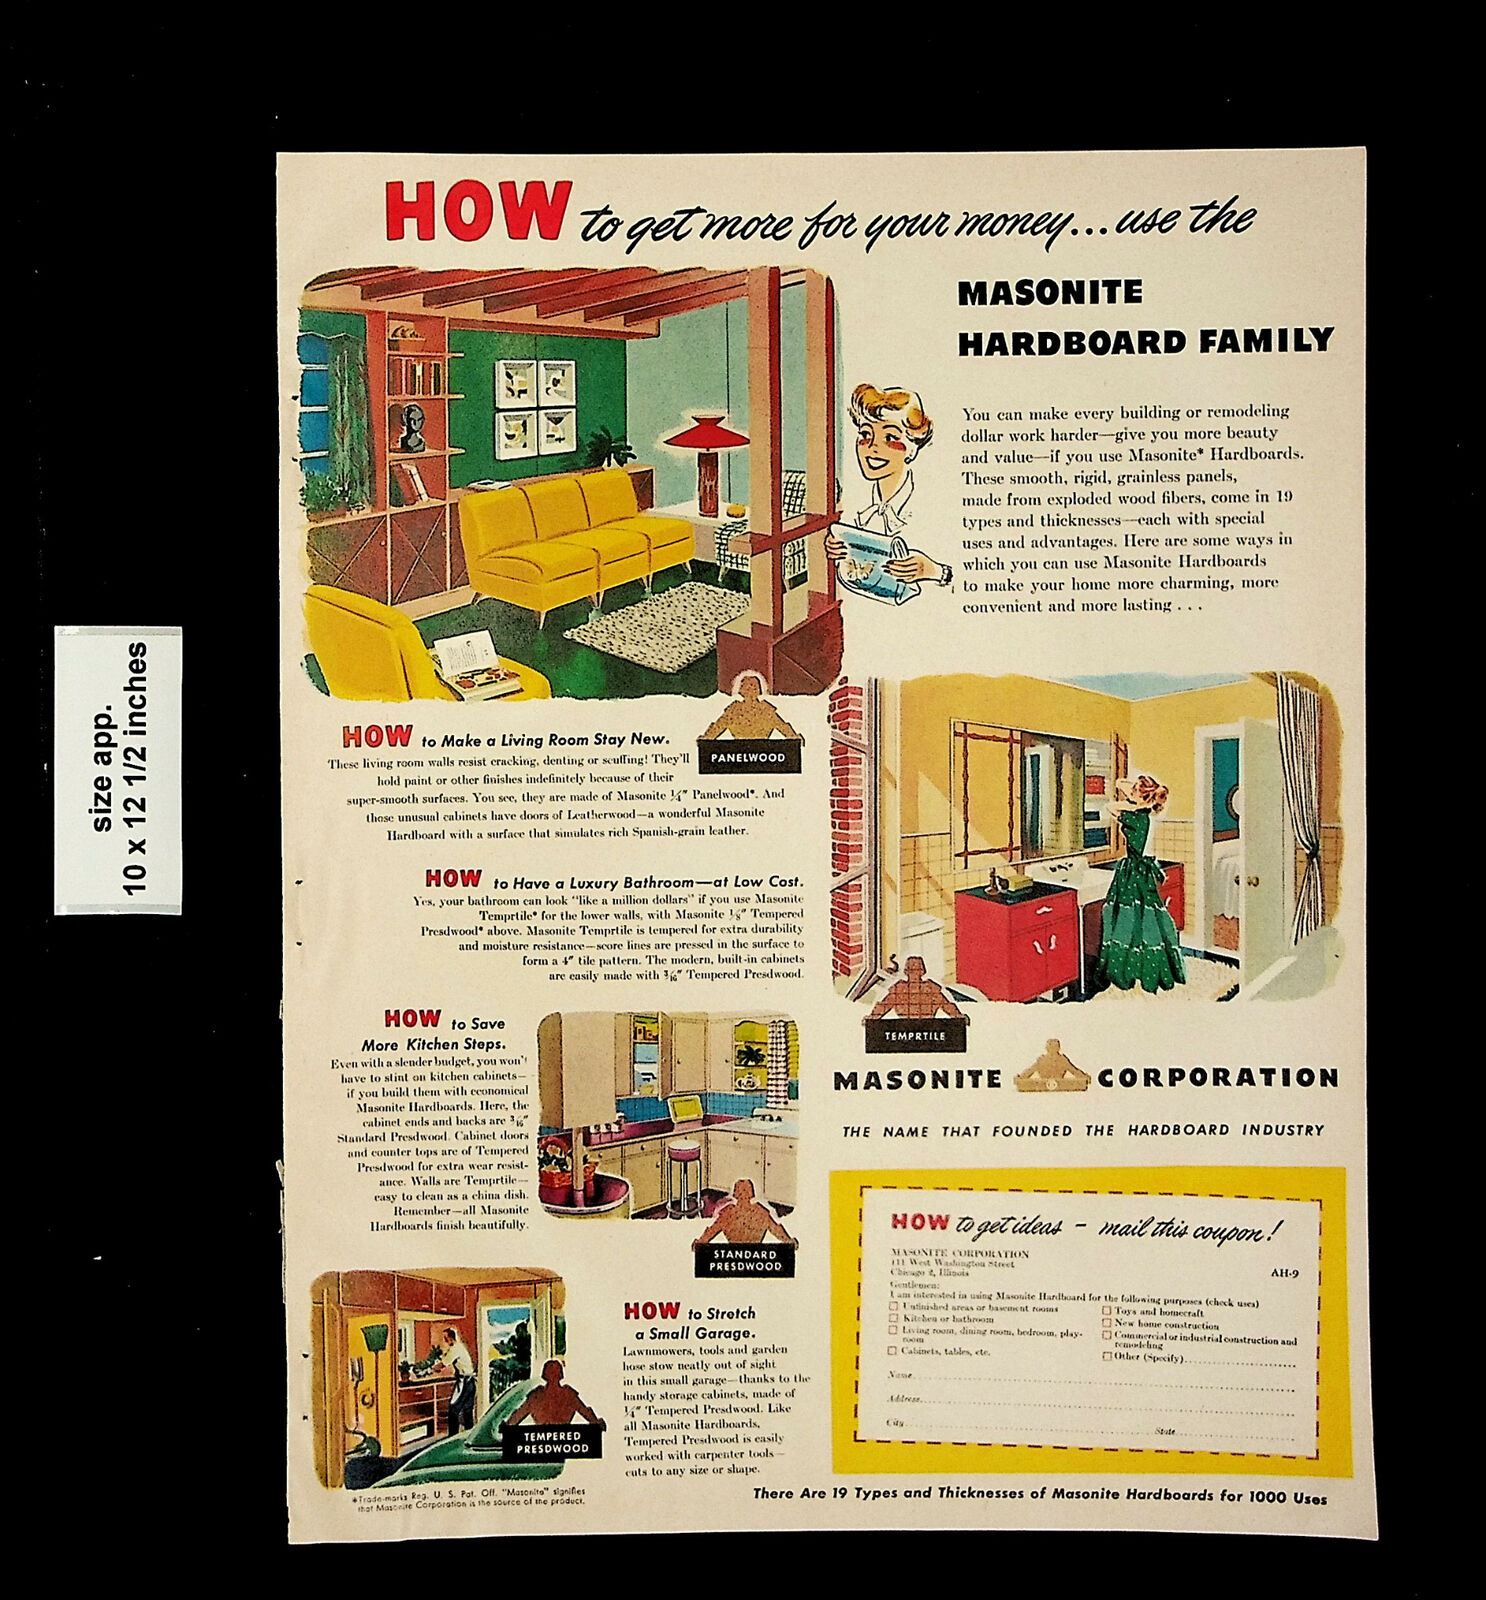 1950 Masonite Corporation Hardboard Family Home Building Vintage Print Ad 24948